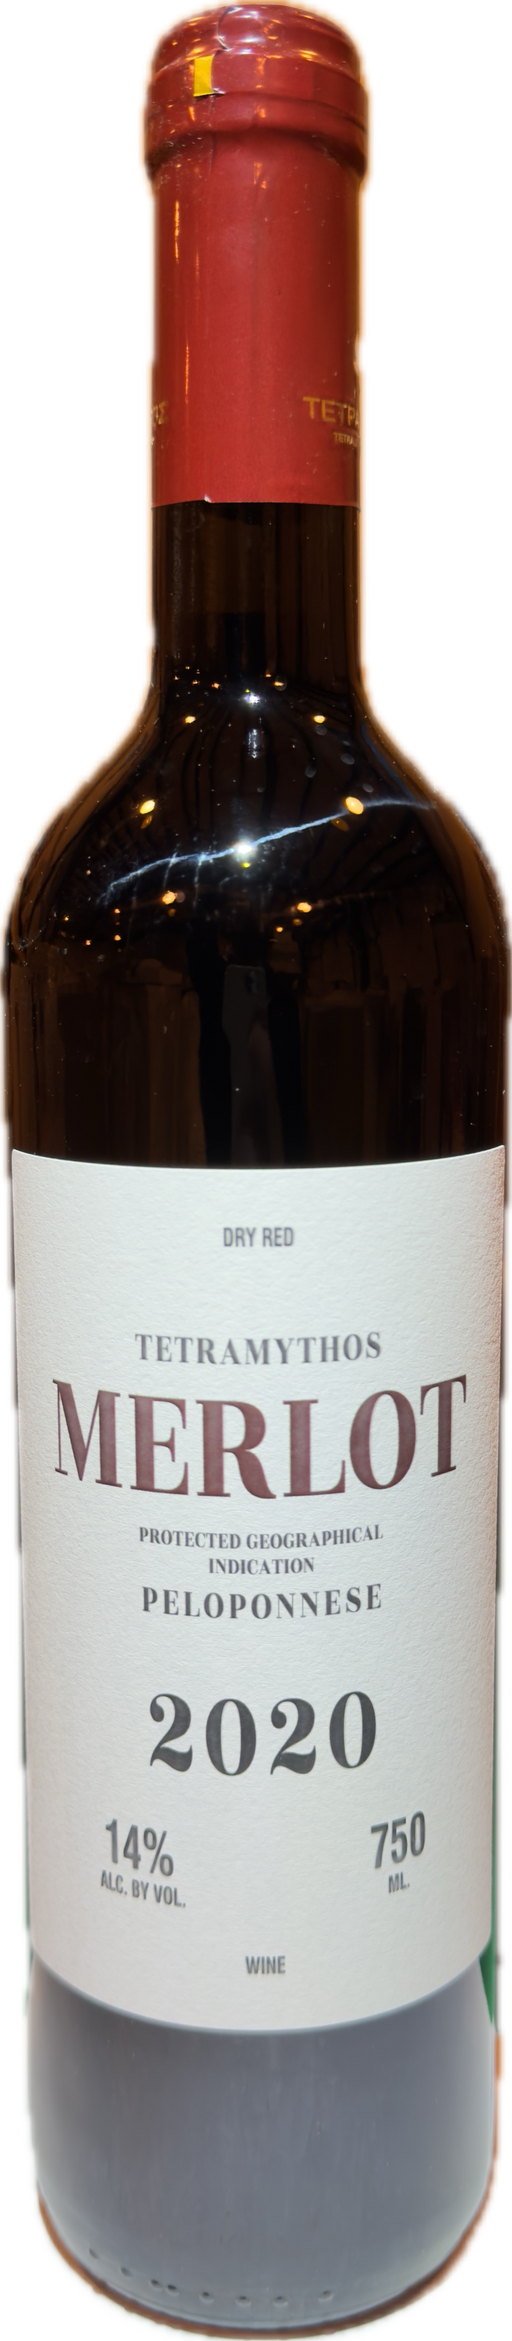 Tetramythos Merlot organic 2020